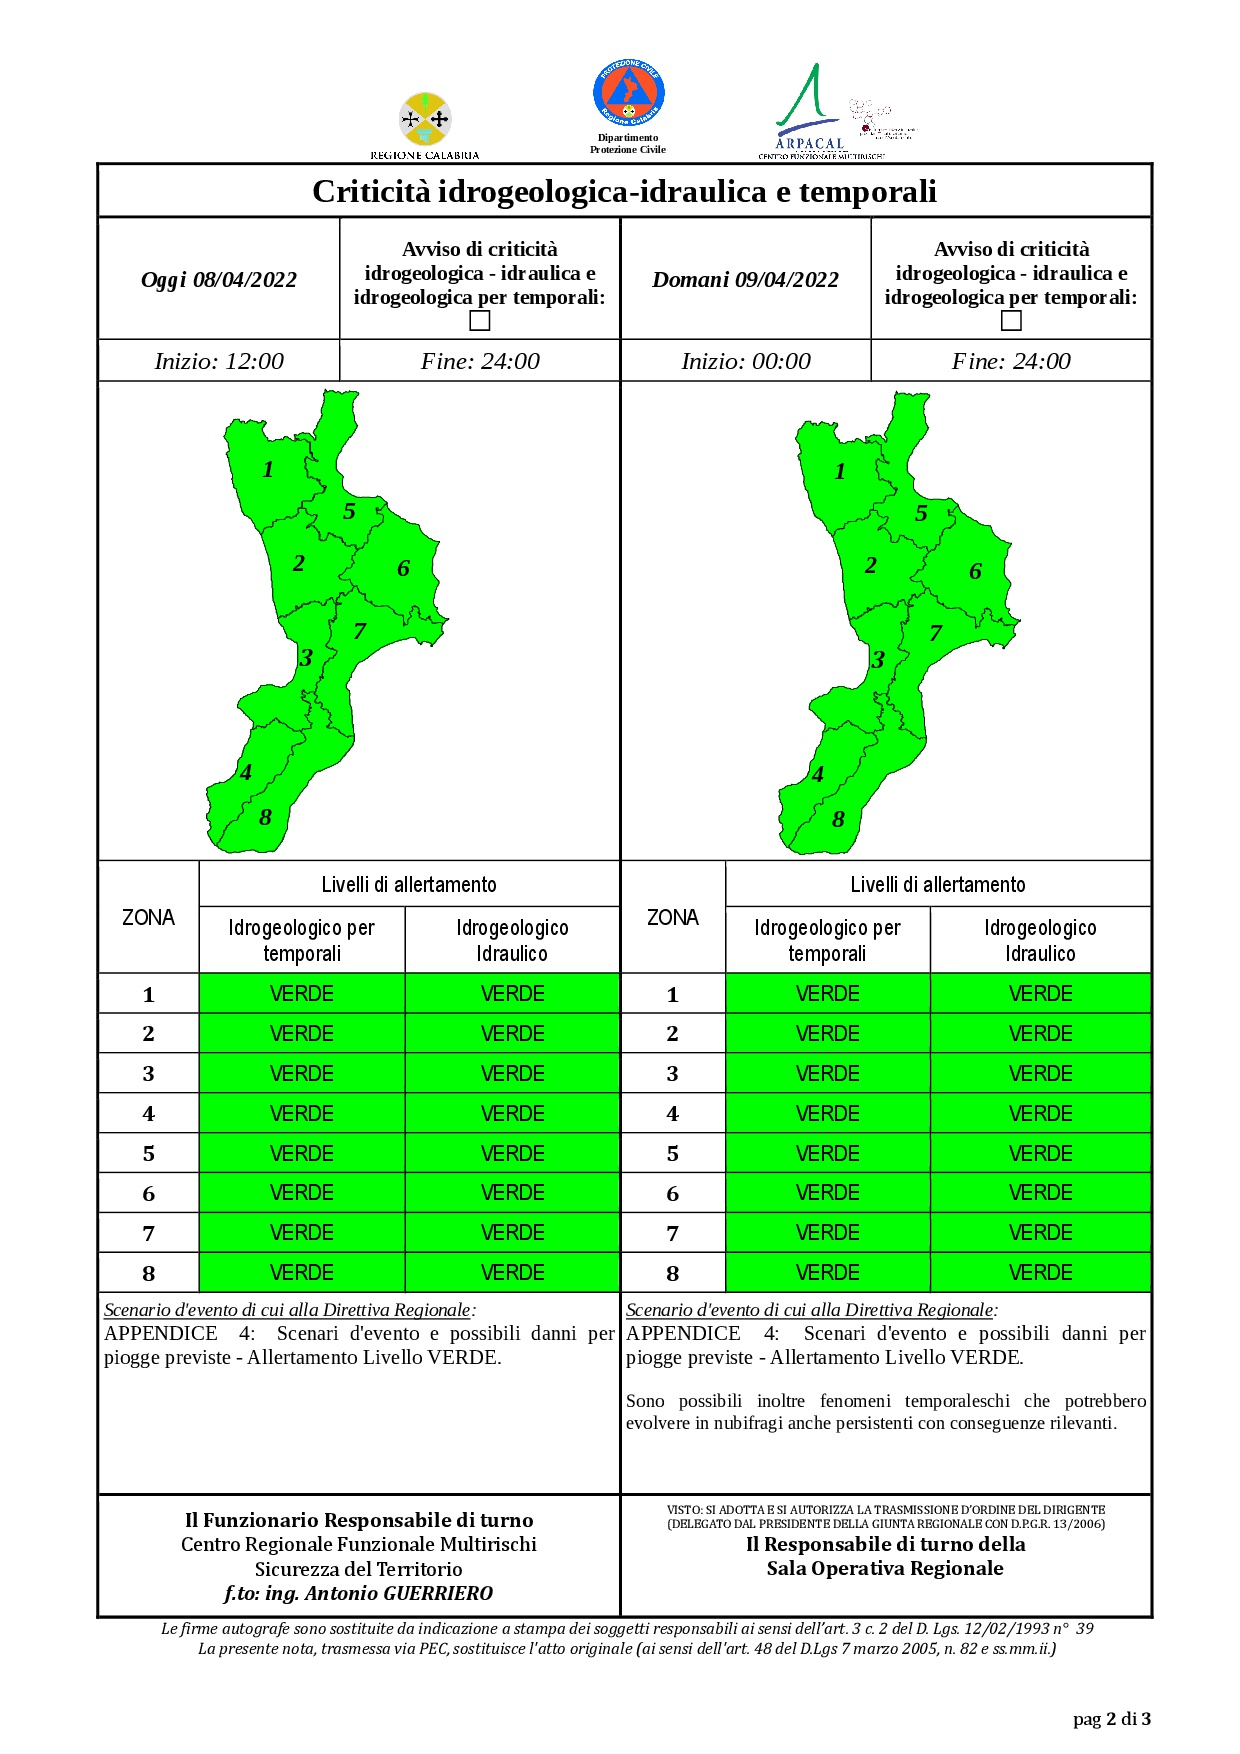 Criticità idrogeologica-idraulica e temporali in Calabria 08-04-2022